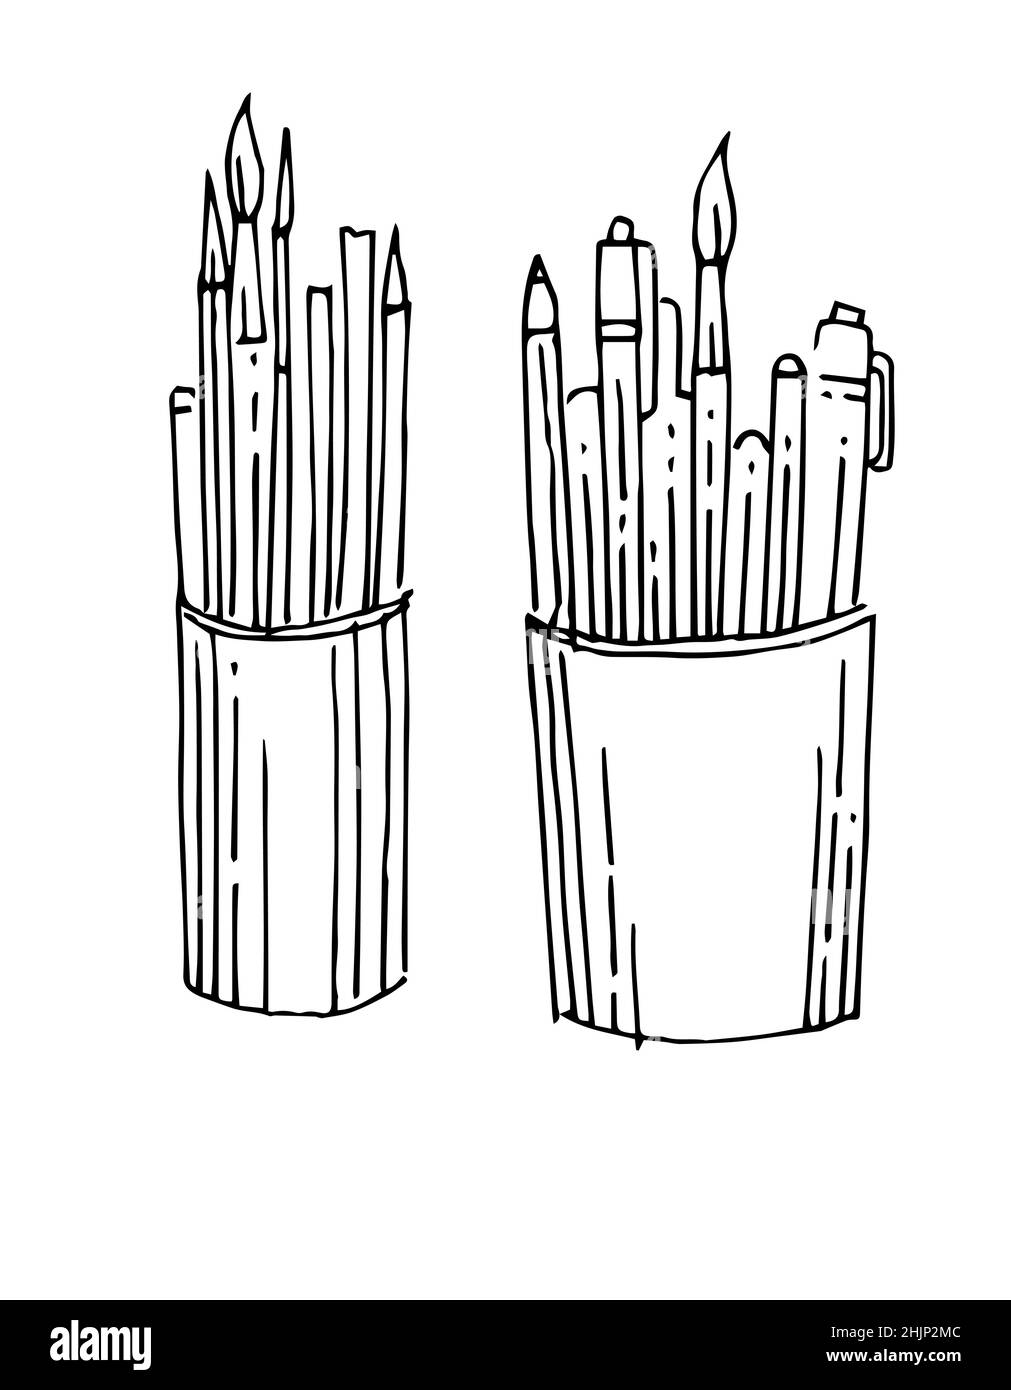 brush pot drawing with pencil shading, brush pot drawing